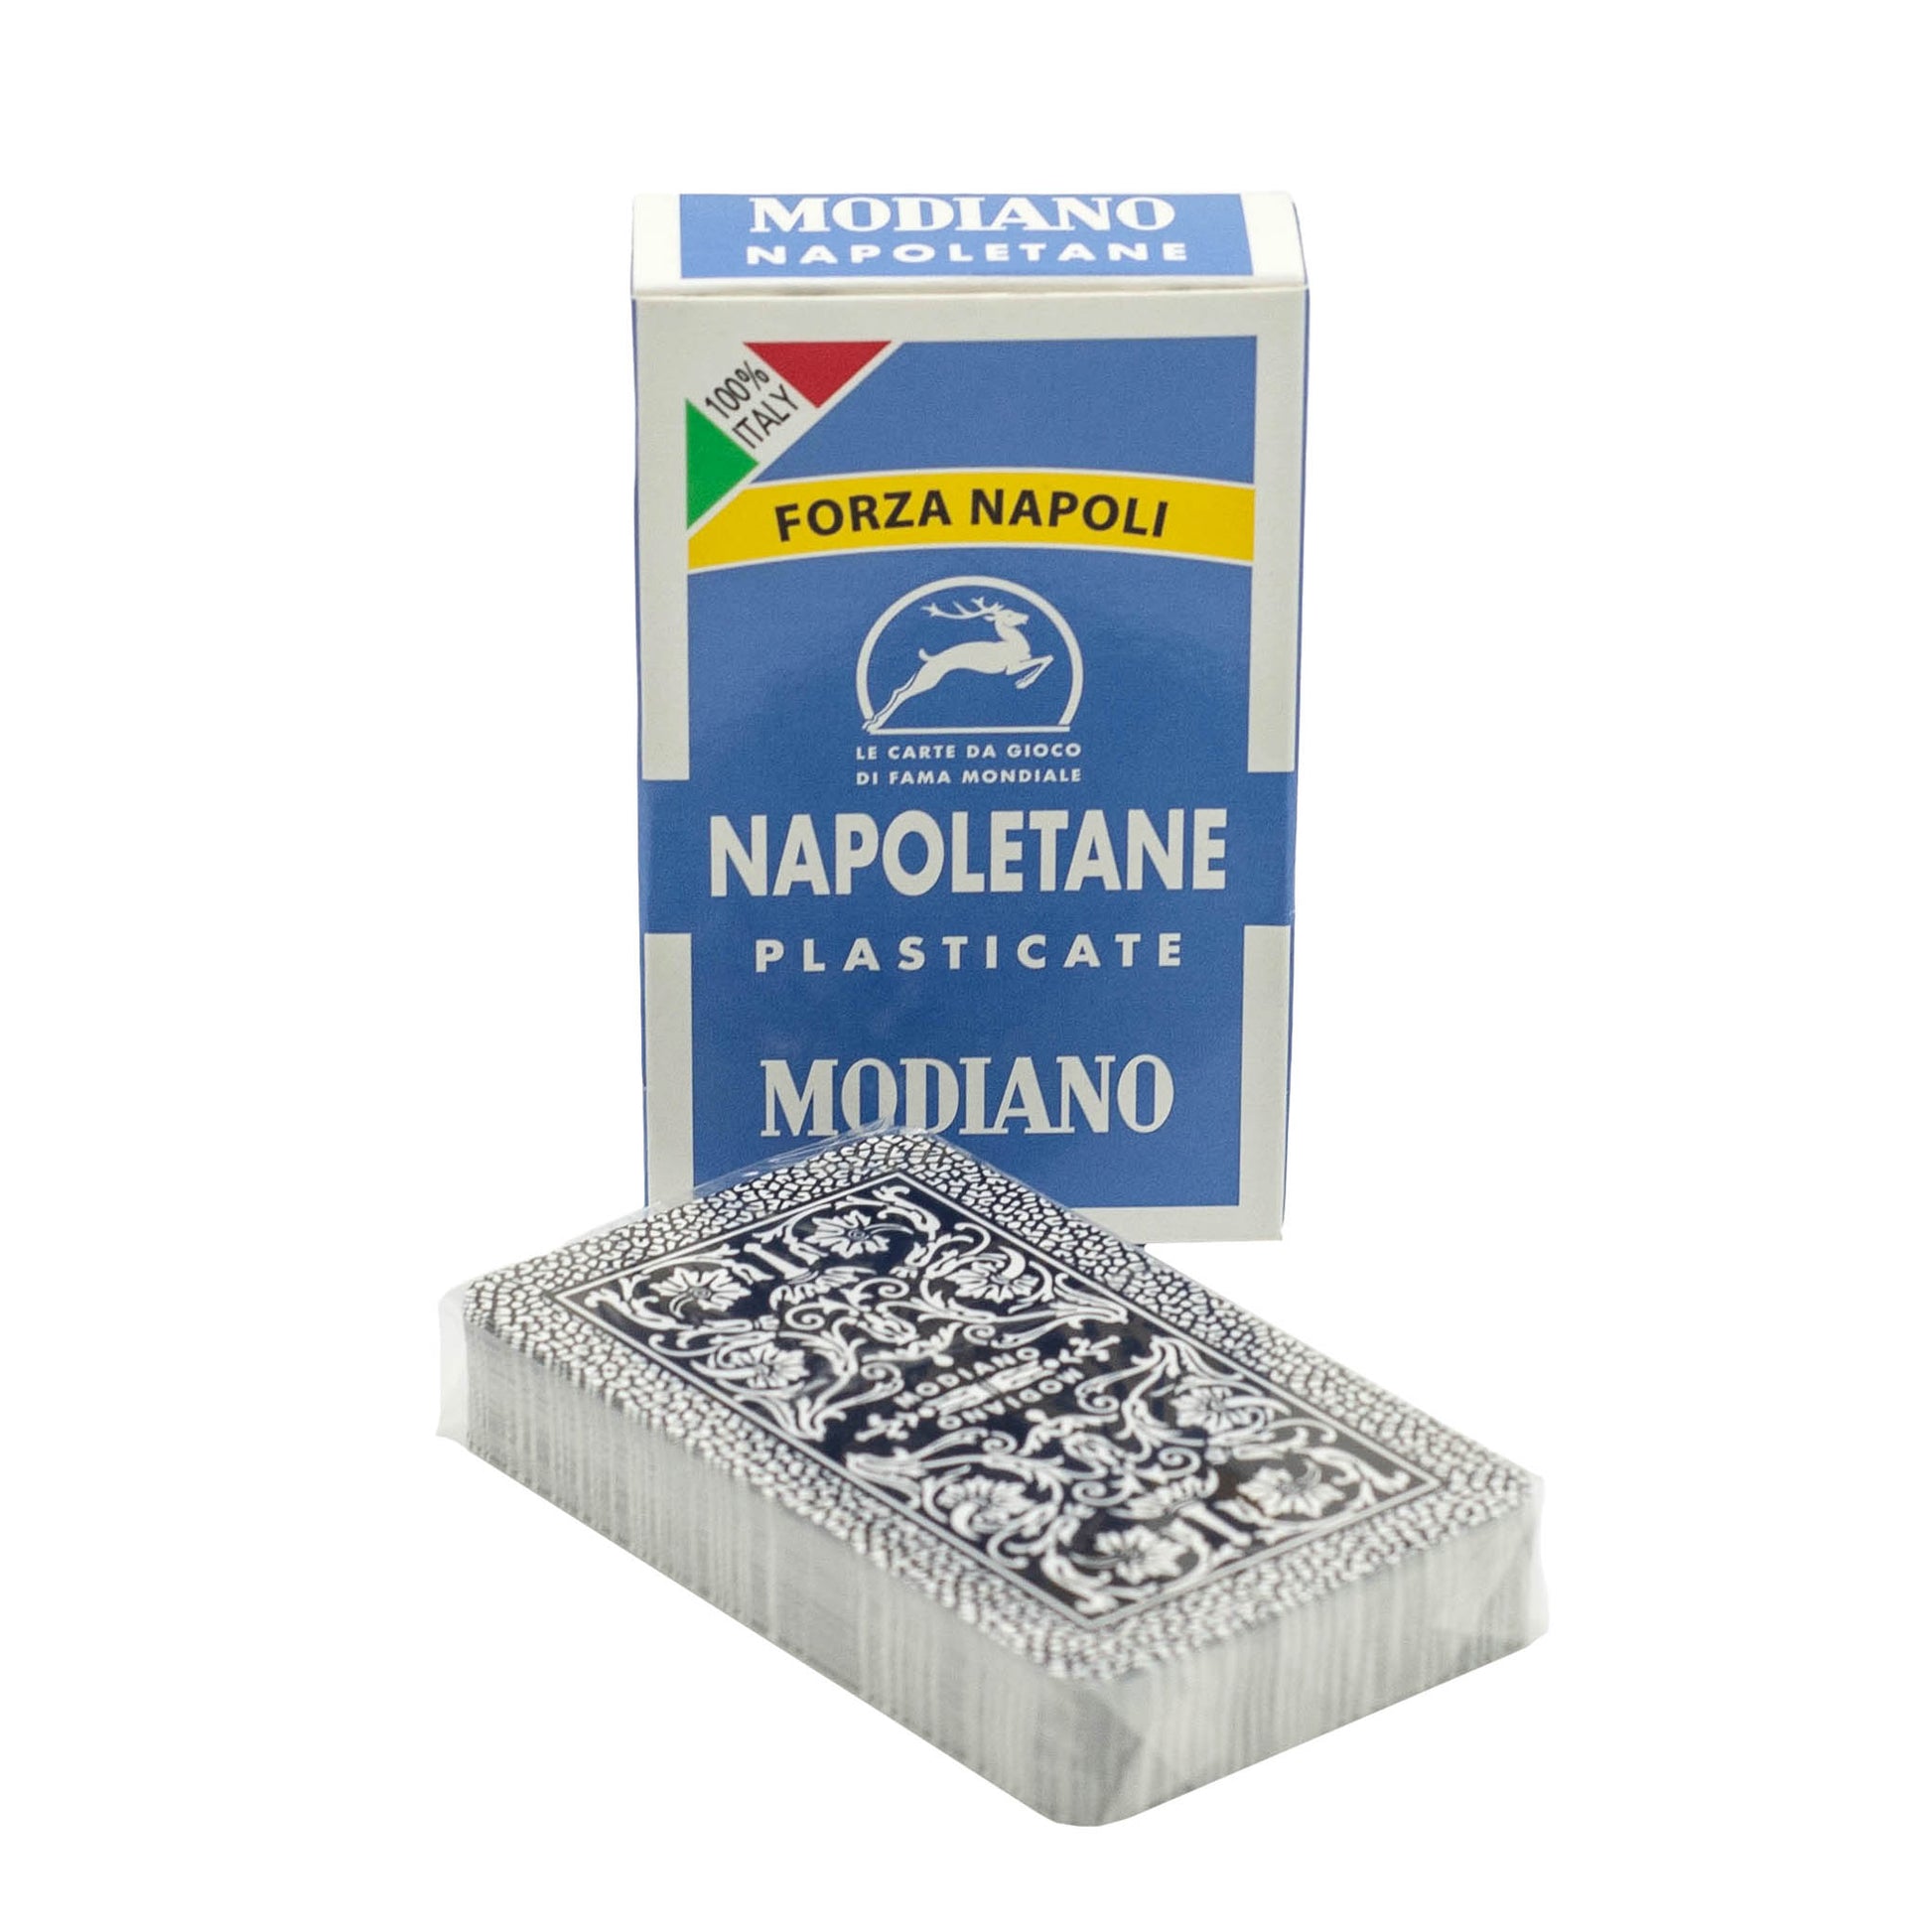 Italian made Modiano playing cards. Napoletane Forza Napoli